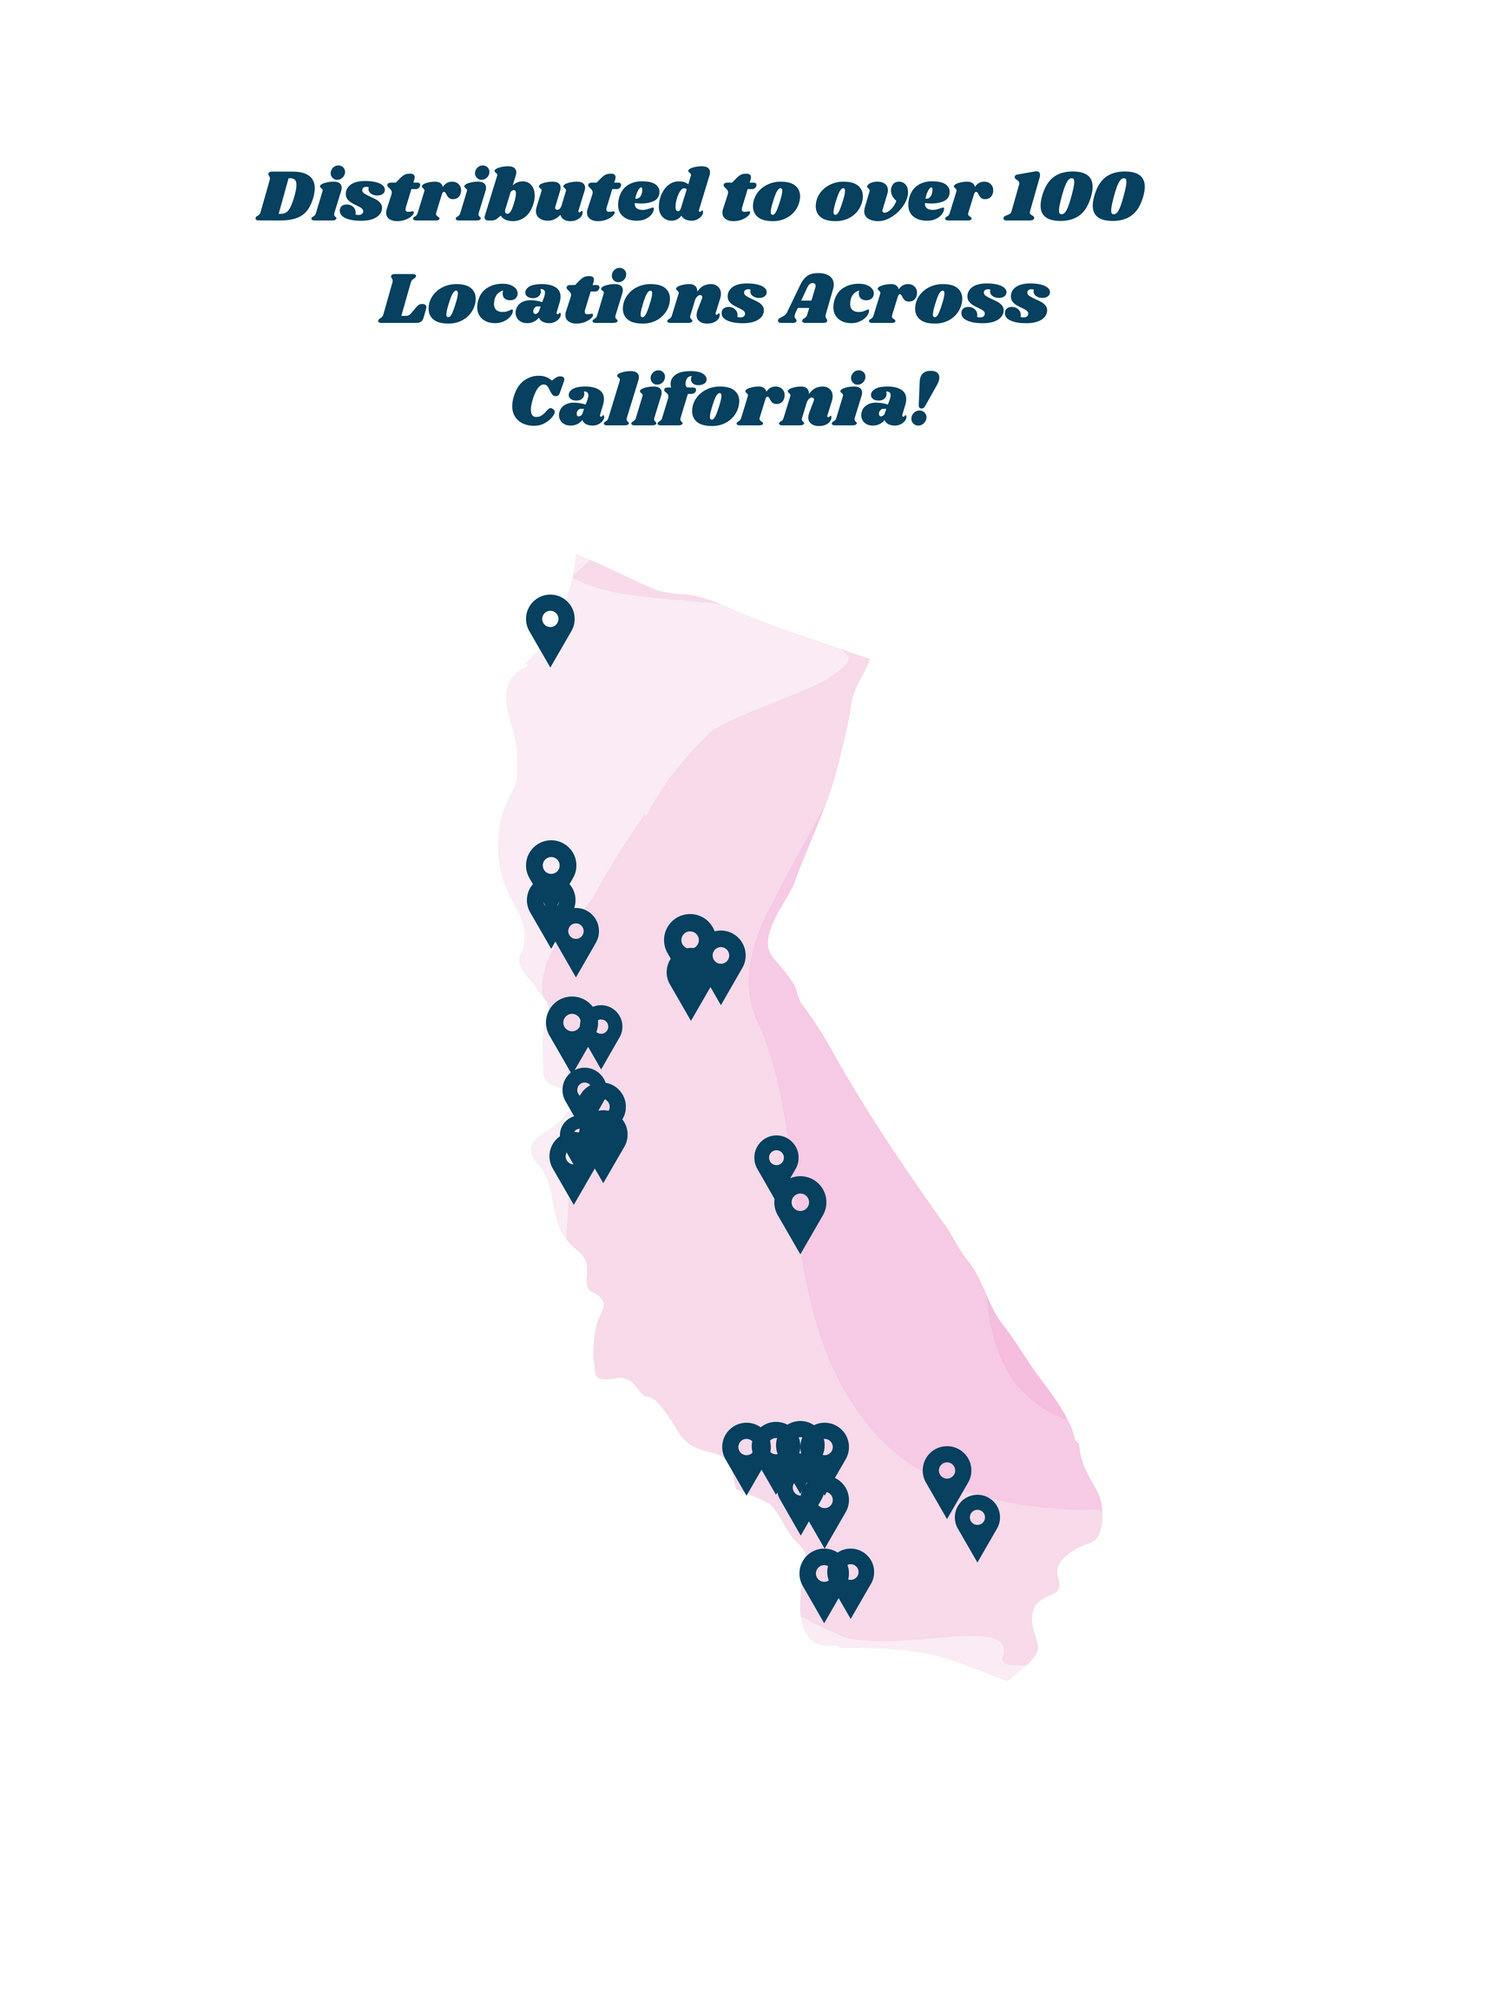 over 100 locations in California 